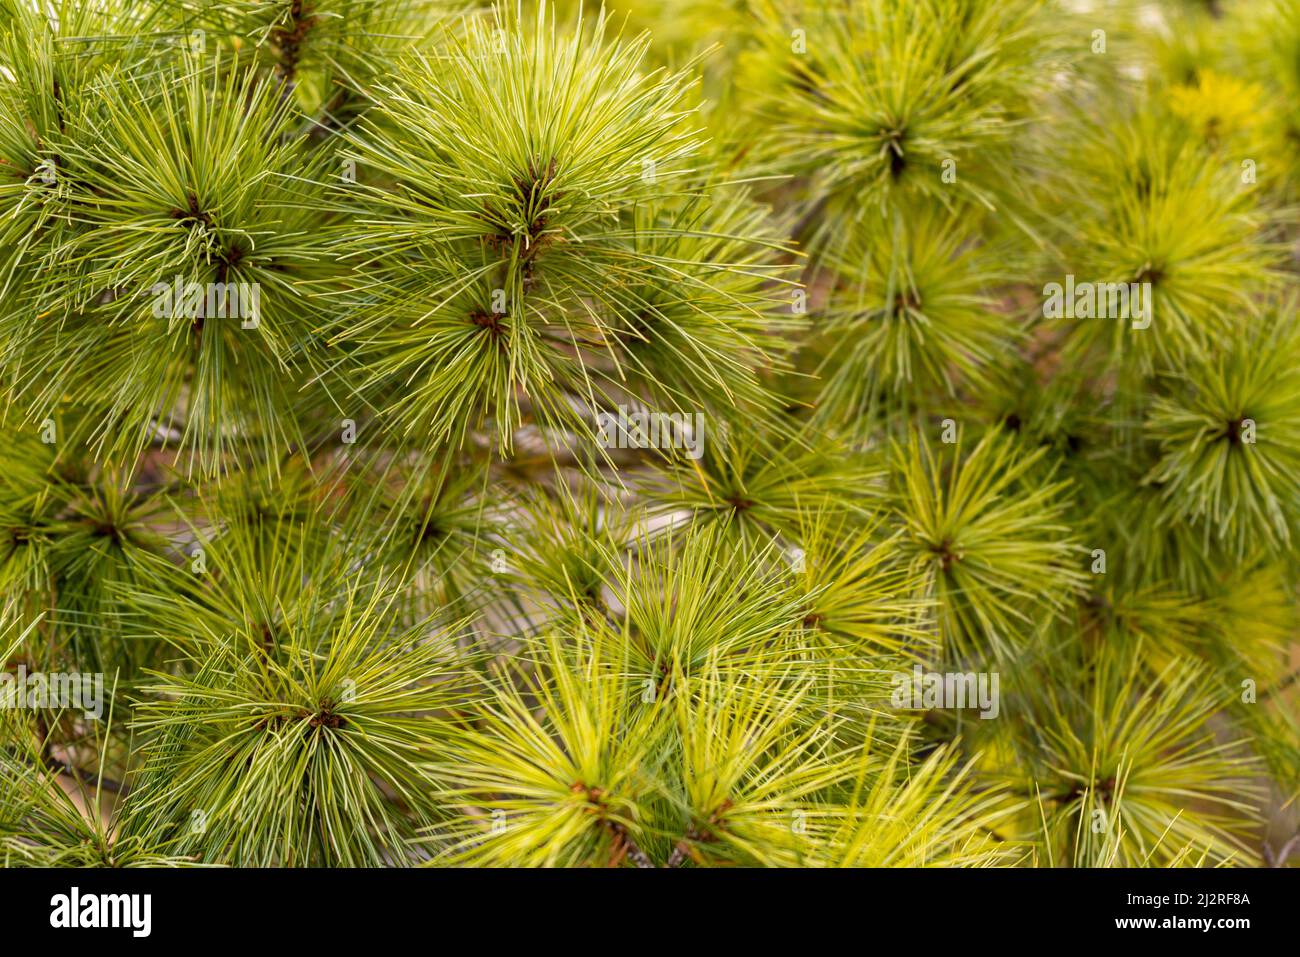 Closeup shot of a pine plant Stock Photo